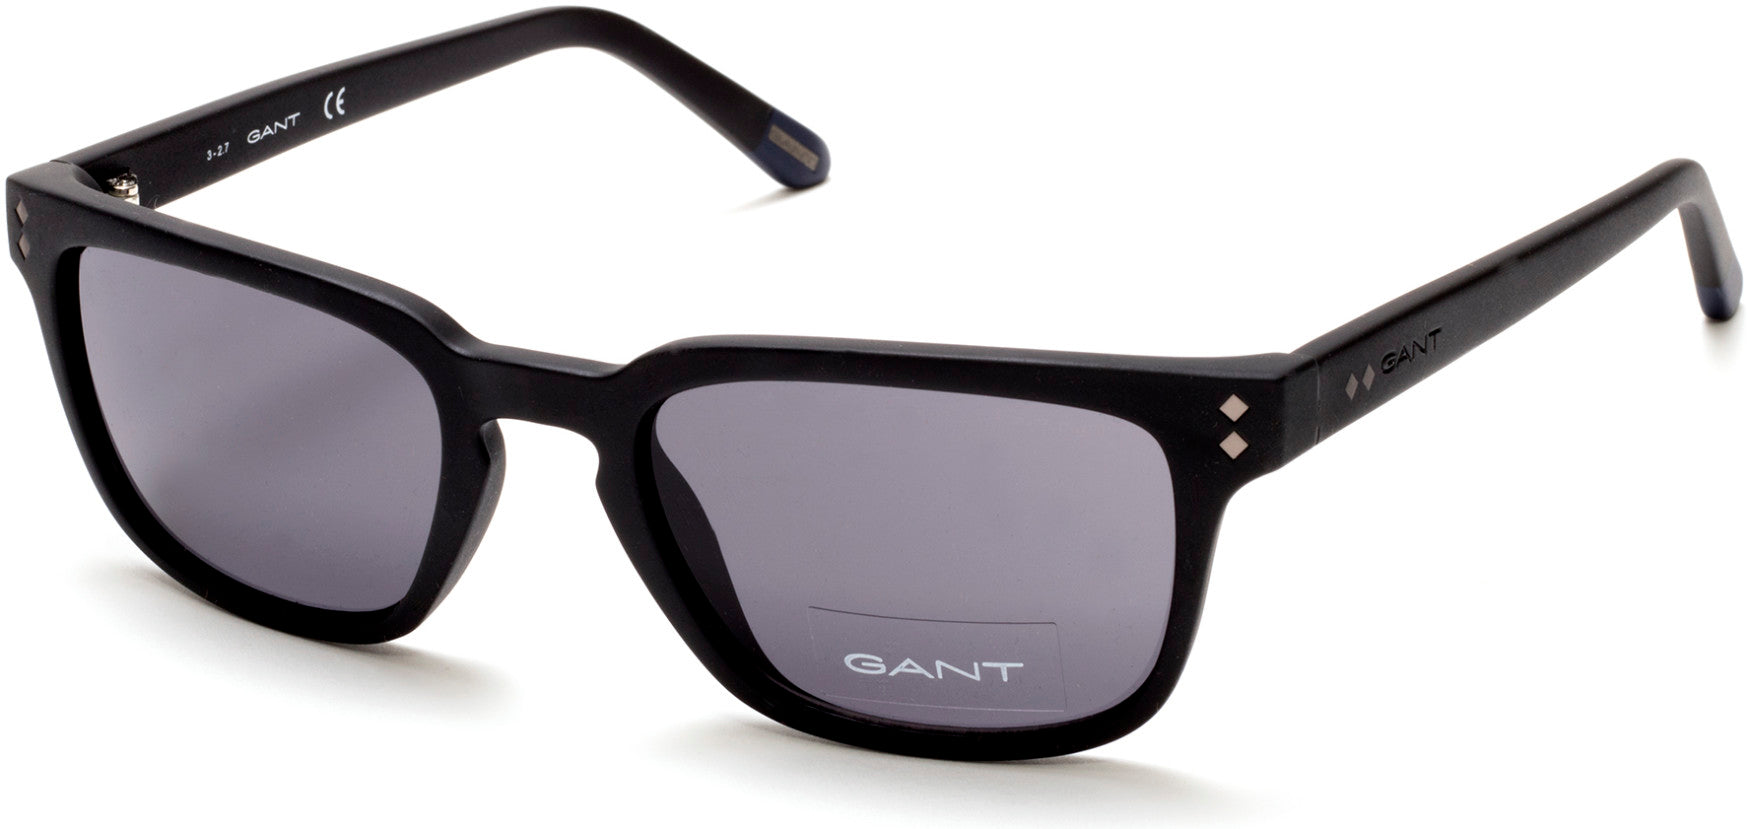 Gant GA7080 Rectangular Sunglasses 02A-02A - Matte Black / Smoke